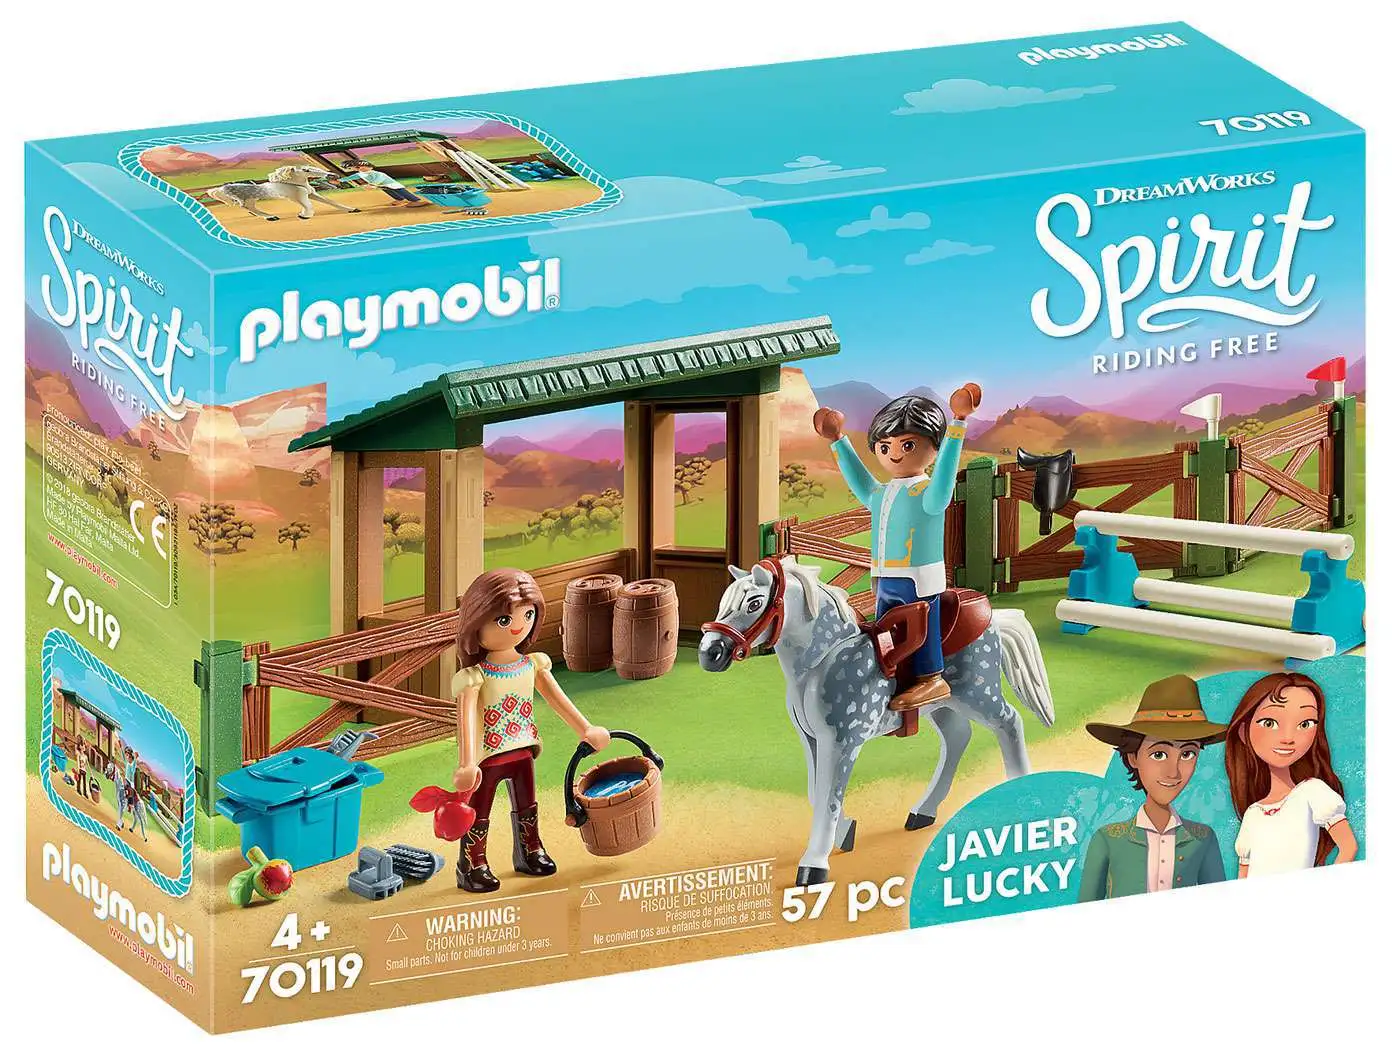 NEW!! Playmobil 70122 Dreamworks Spirit Pru with Horse & Foal 